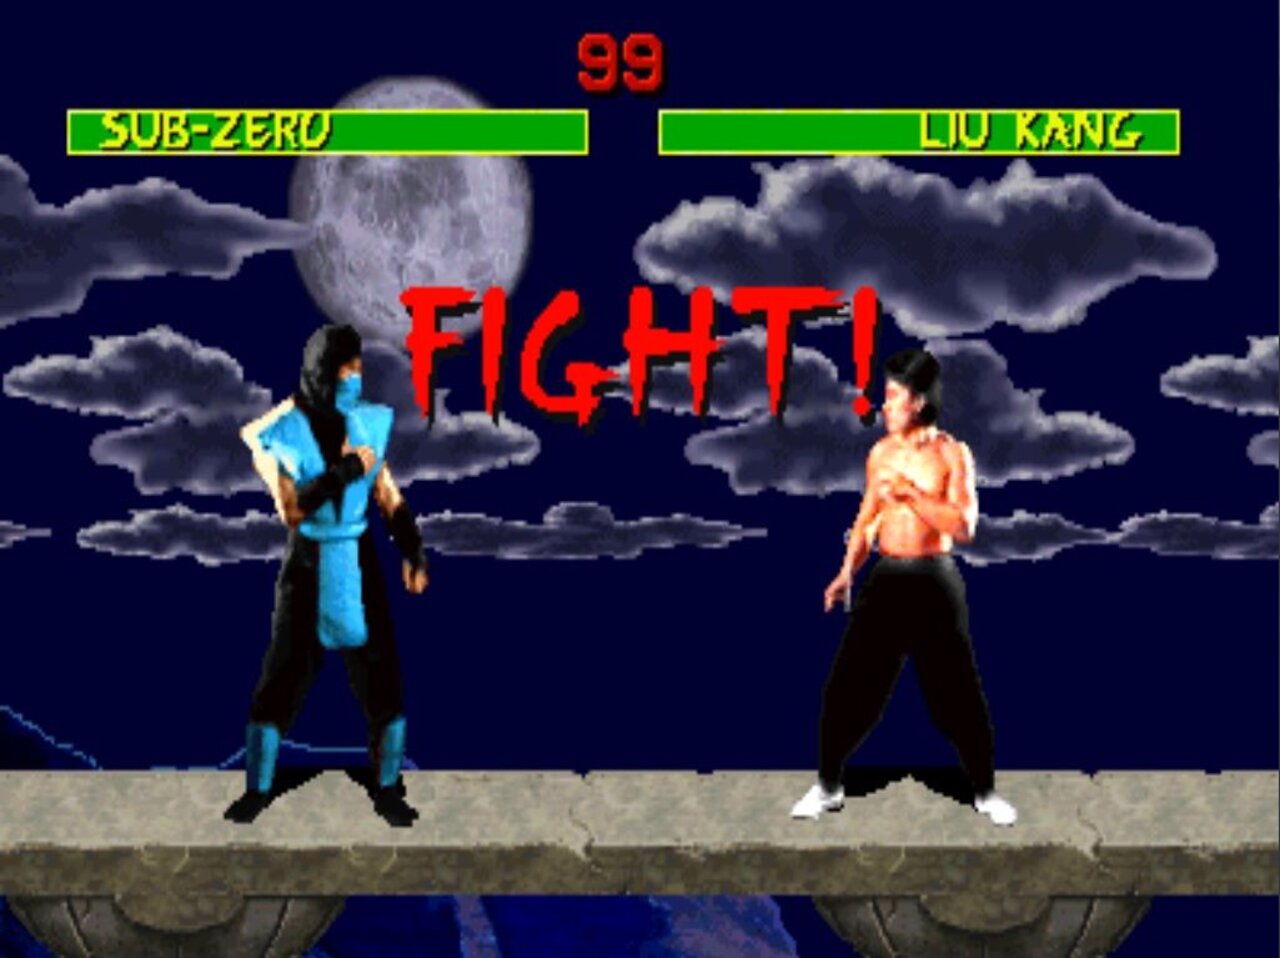 Mortal Kombat: Liu Kang fatality, FINISH HIM: How to Make a…